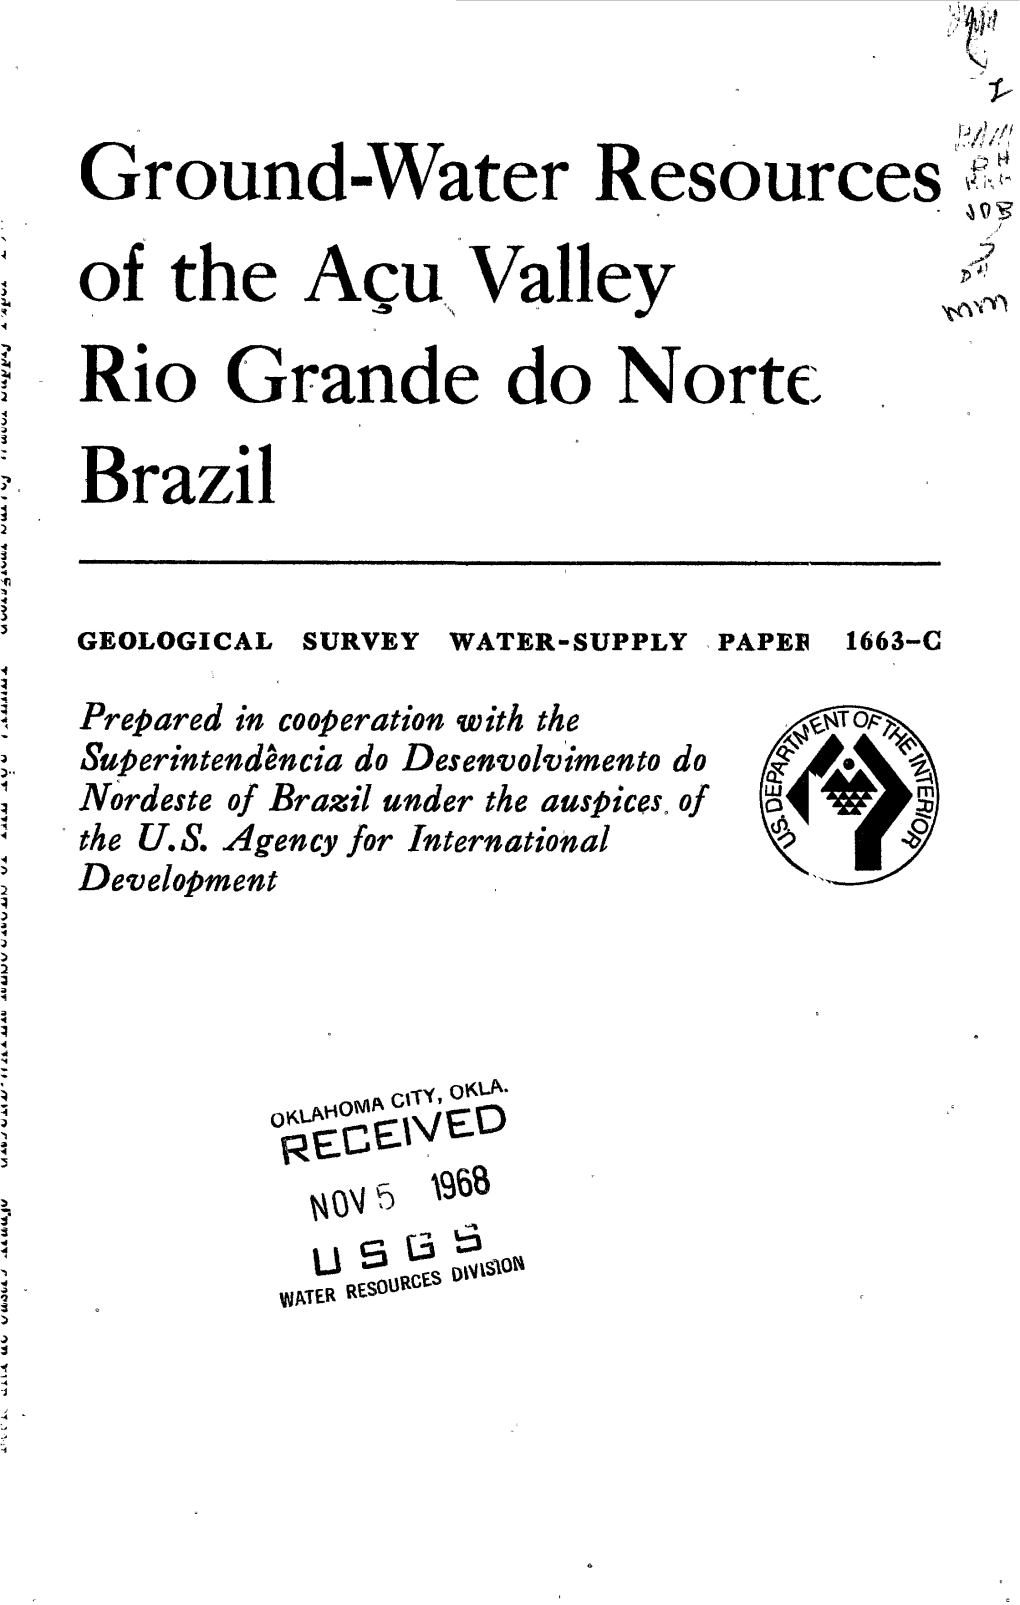 Ground-Water Resources of the Agu Valley Rio Grande Do Norte Brazil